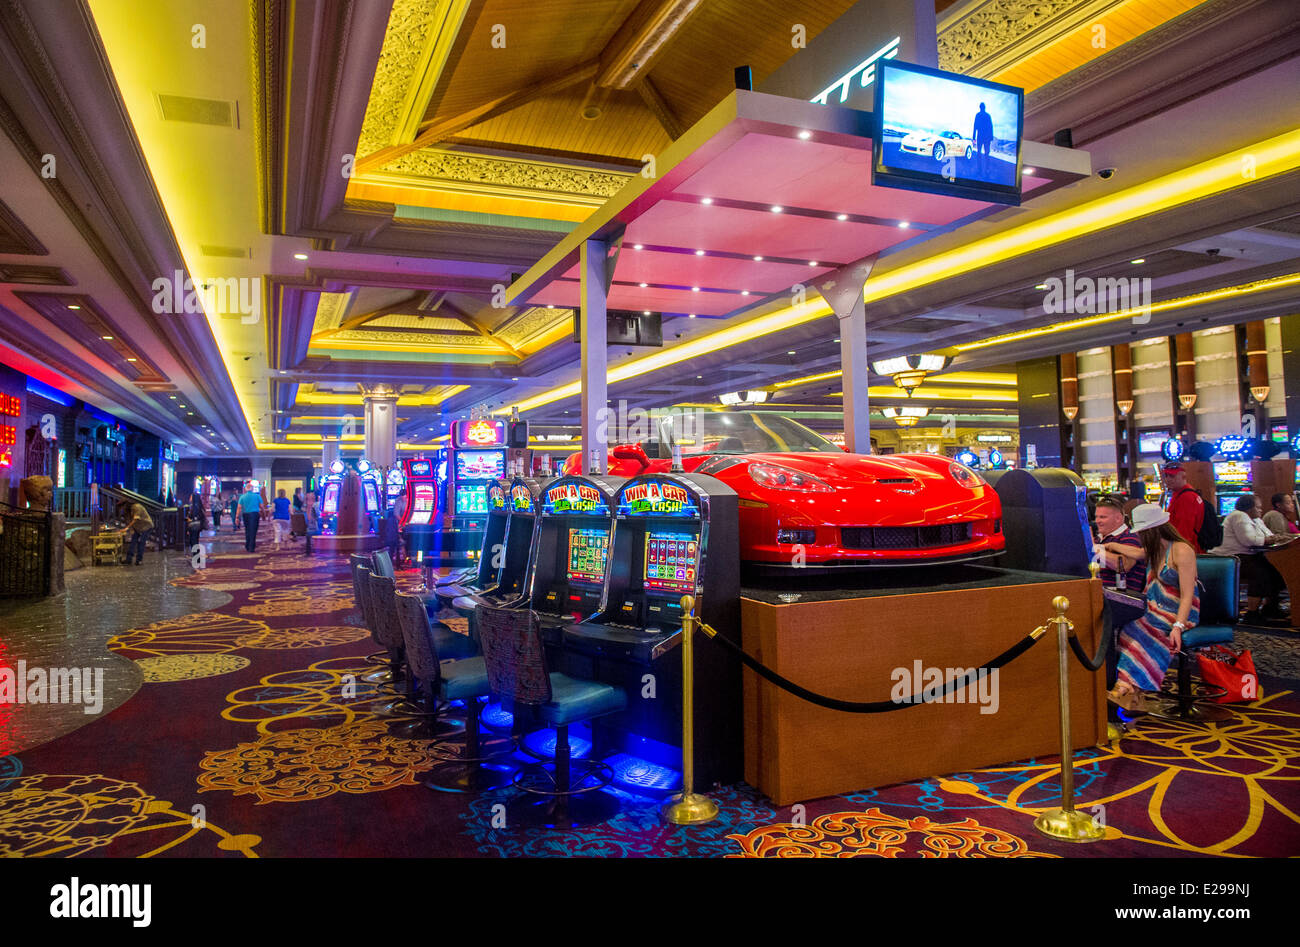 The interior of Mandalay Bay resort in Las Vegas Stock Photo - Alamy